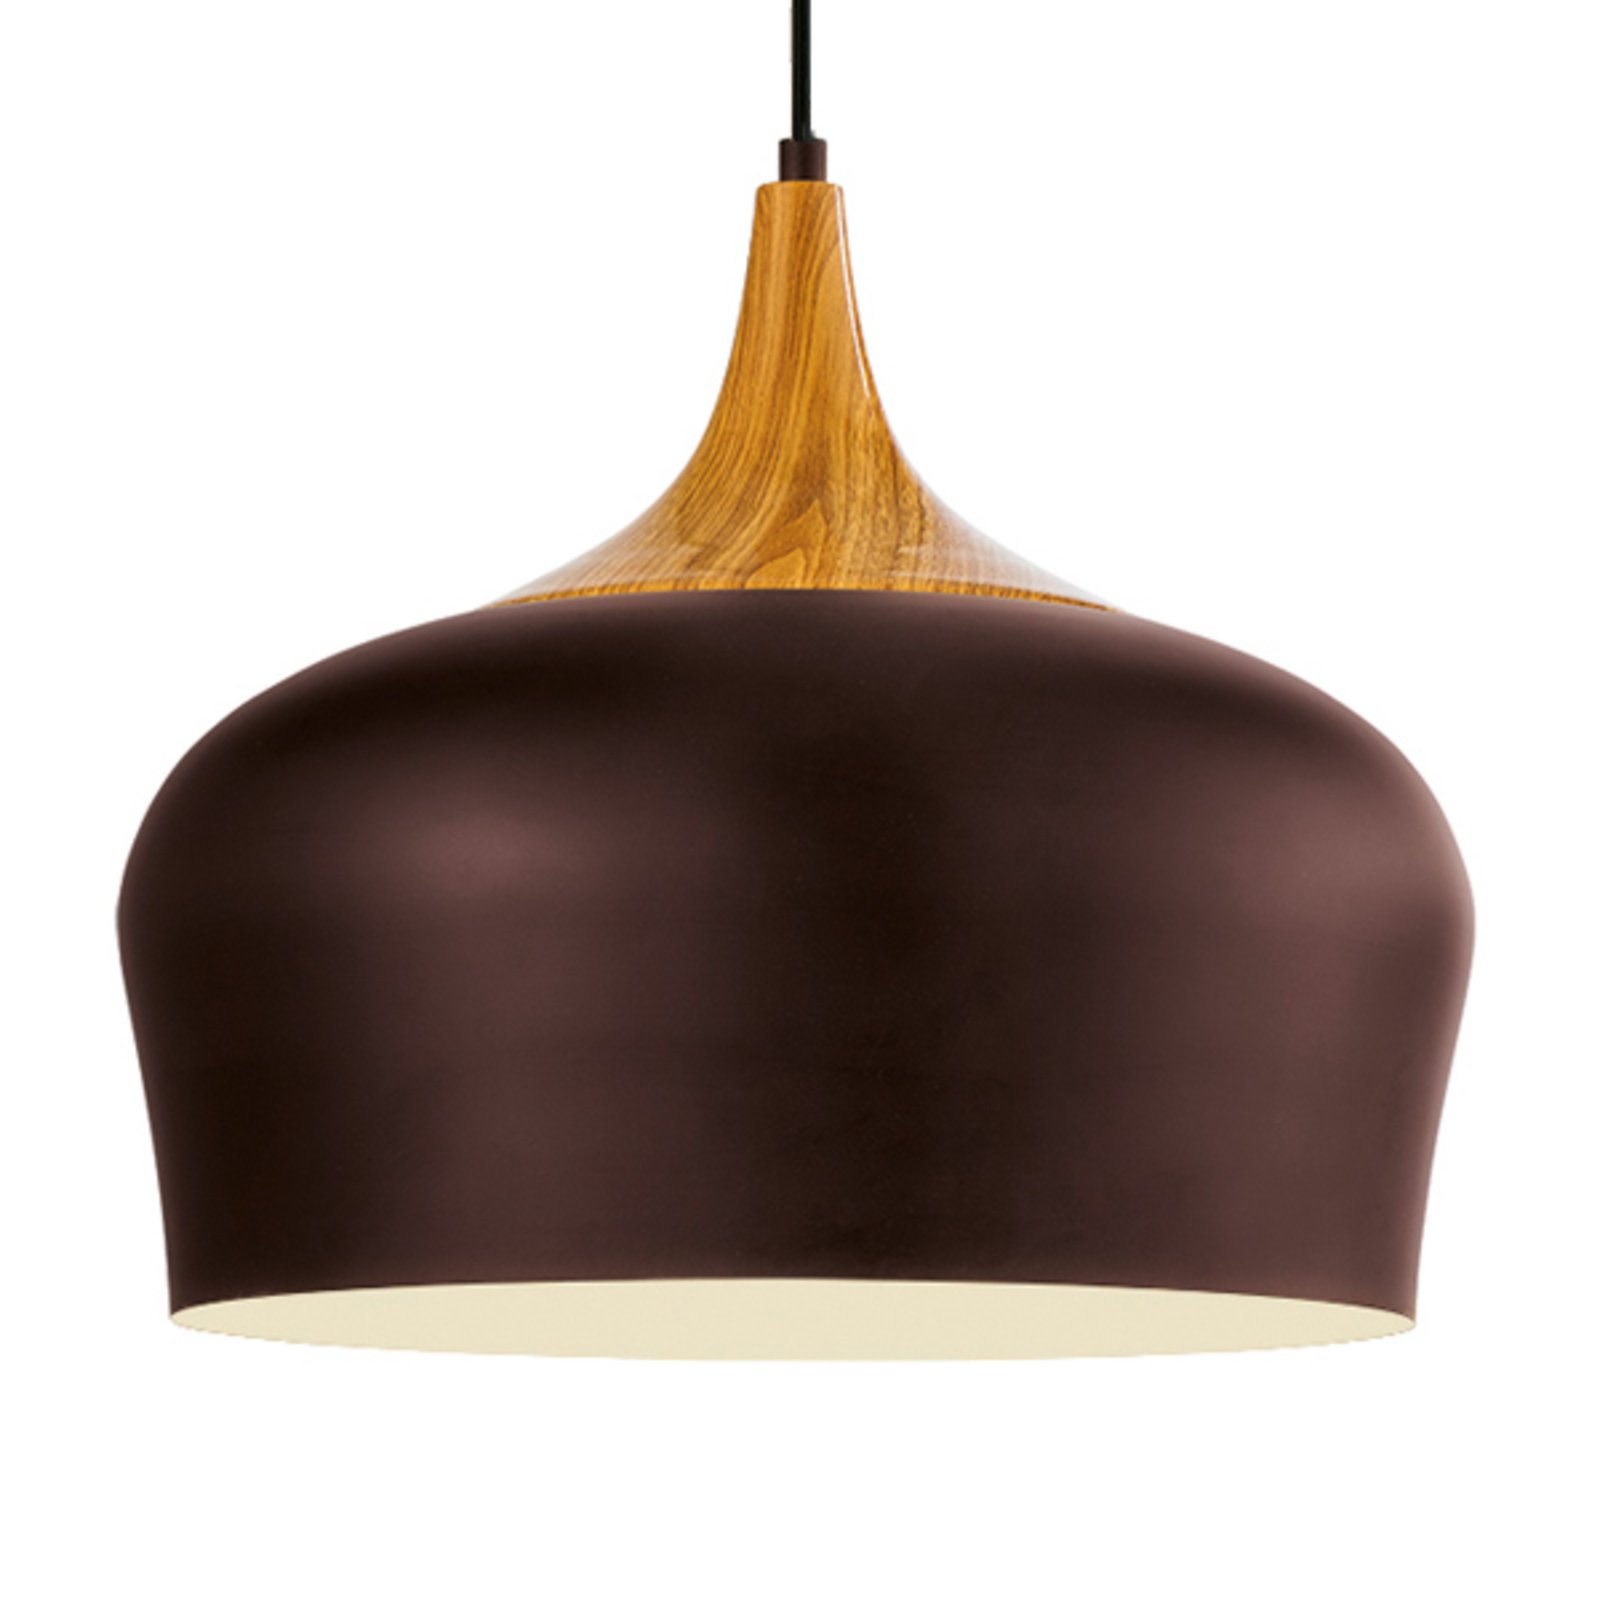 Obregon - mooi gevormde hanglamp in bruin